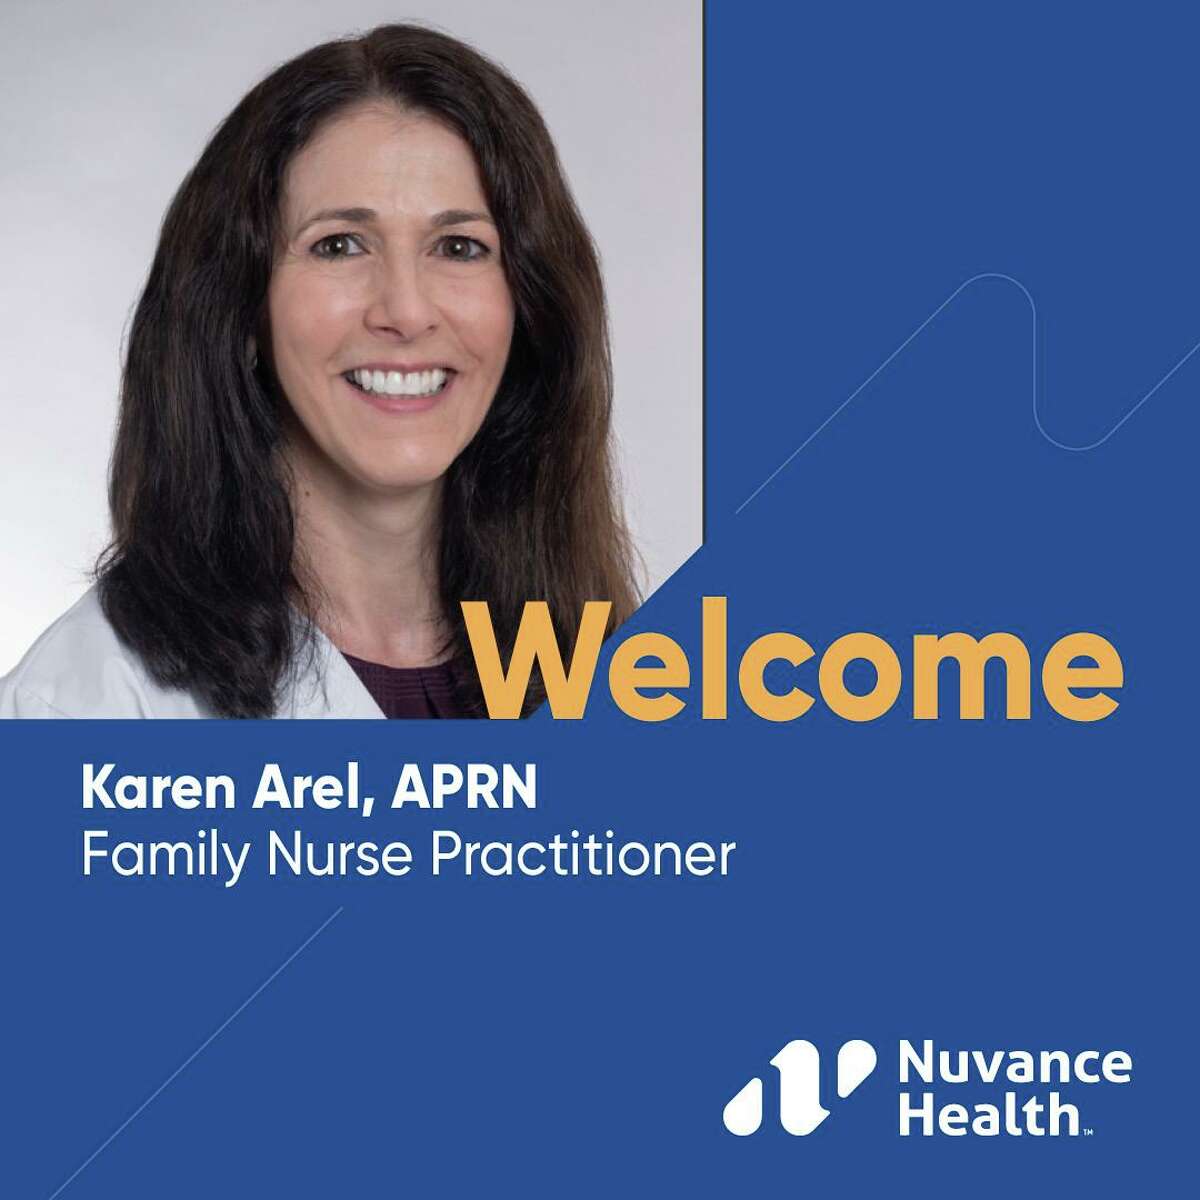 Karen Arel, APRN, has joined Nuvance Health's Sharon practice.